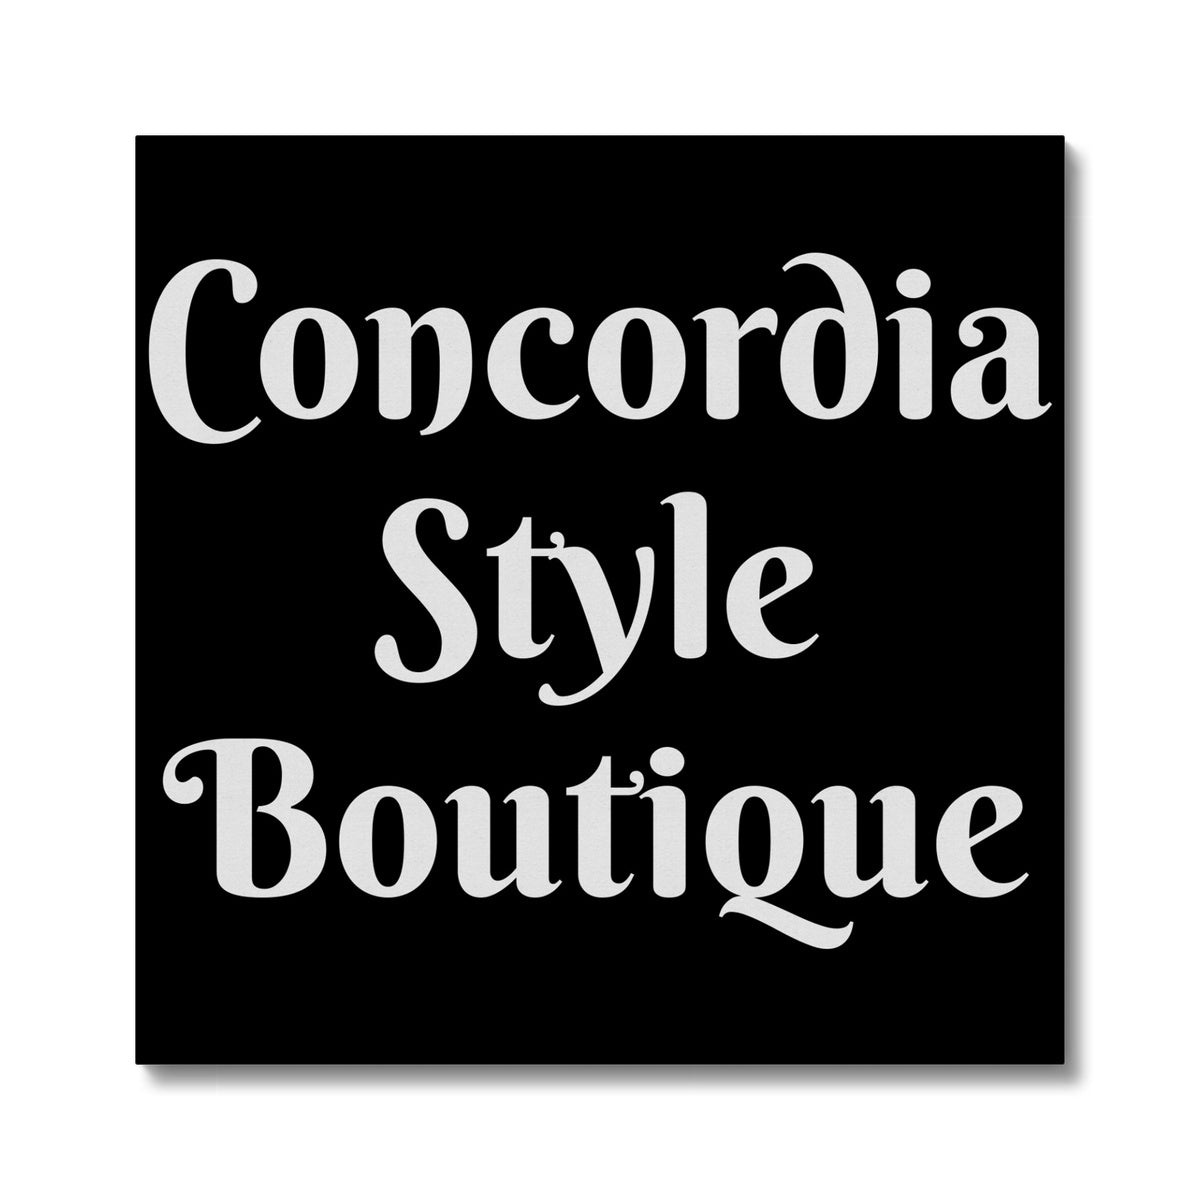 Concordia Style Boutique Canvas